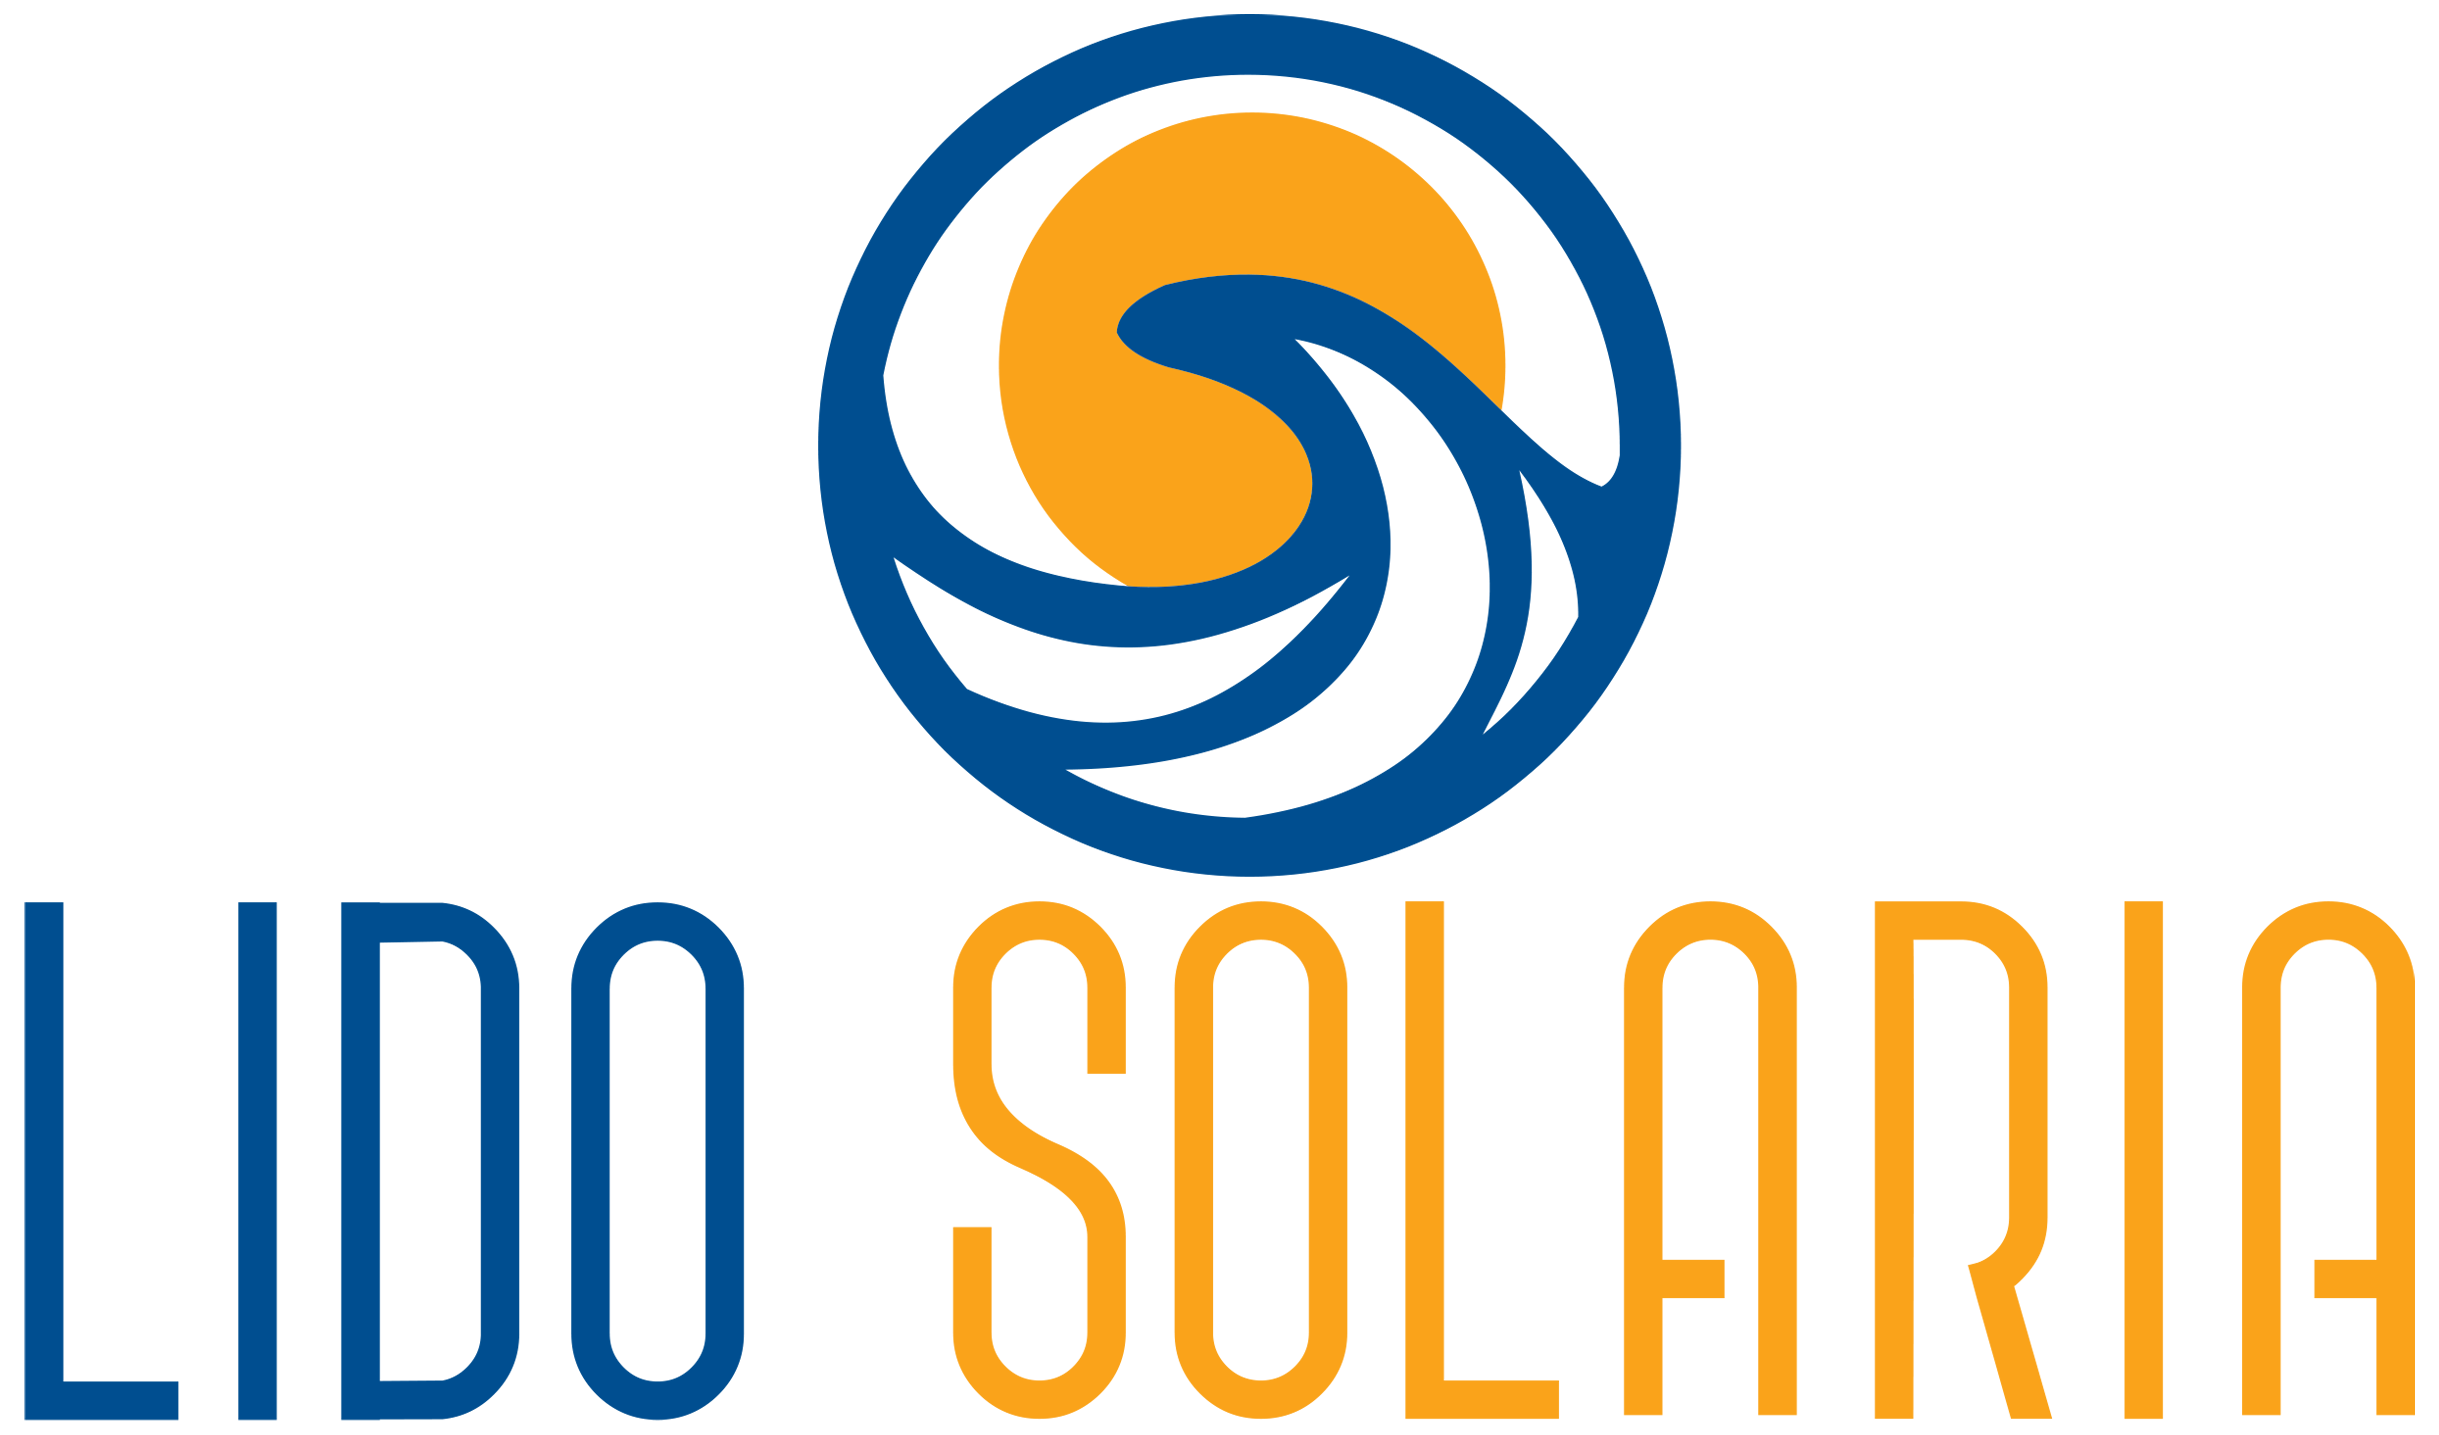 LIDO_SOLARIA_logo_b